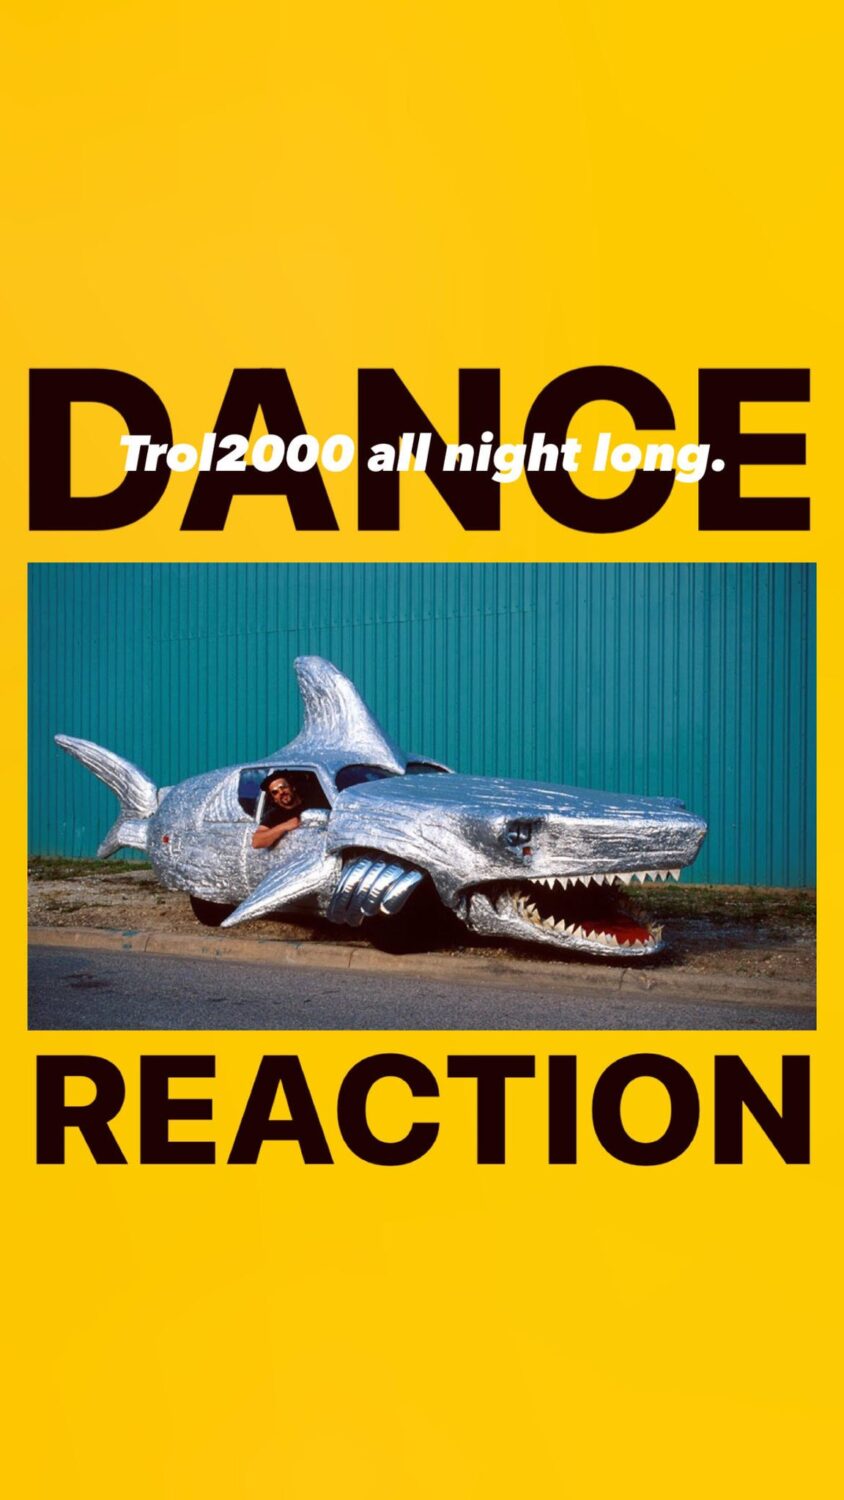 Dance Reaction - Trol2000 all night long FERRO BAR